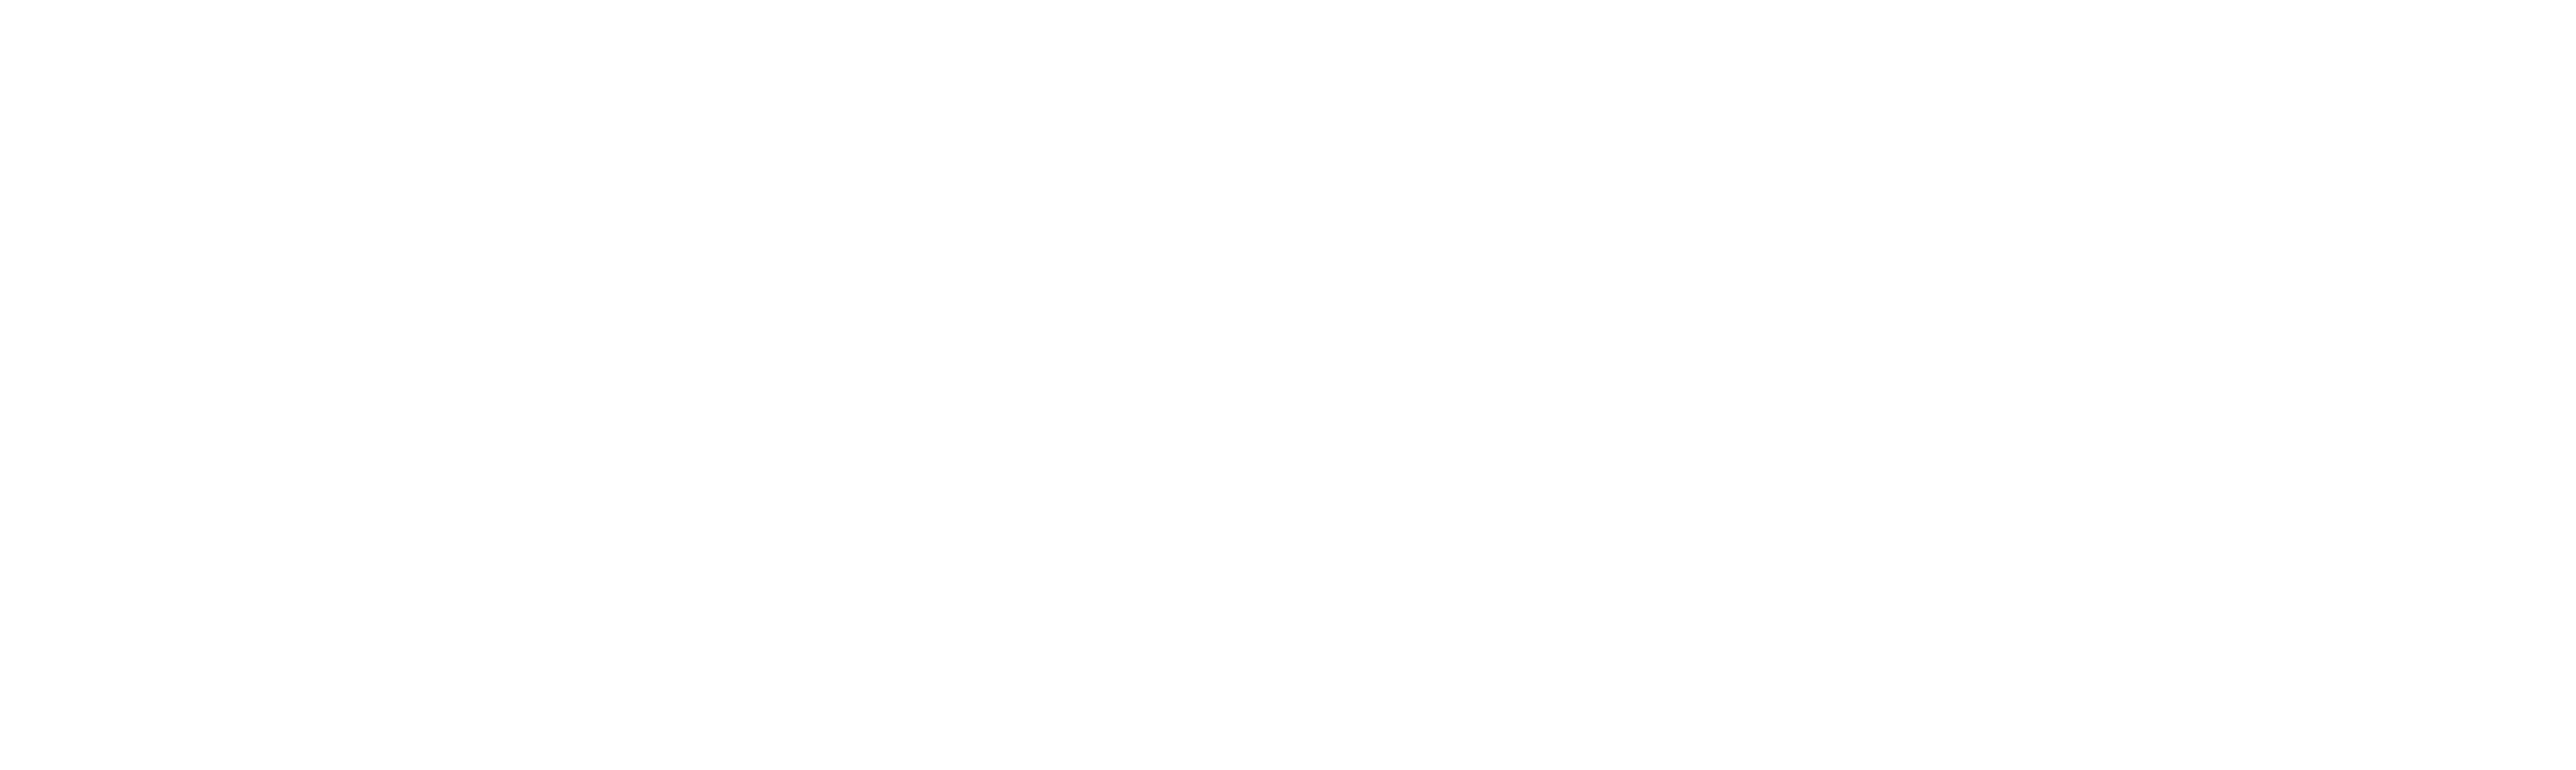 bodmer architectural millwork logo full